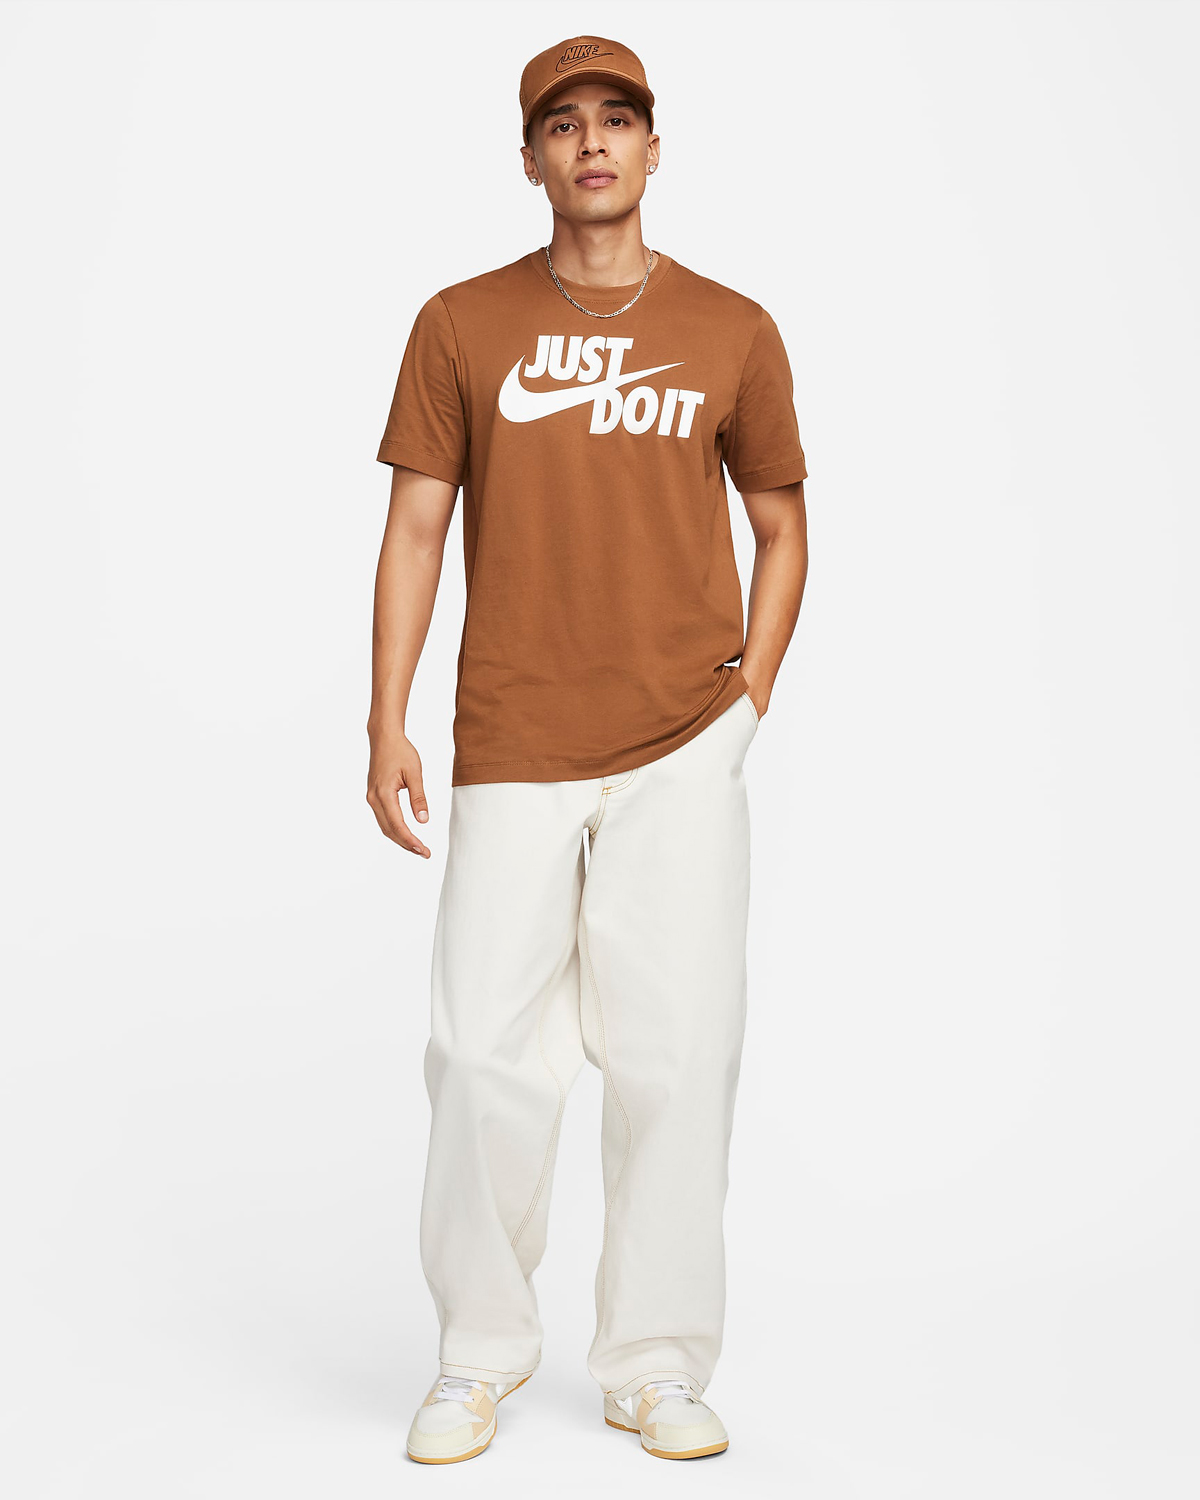 Nike-Sportswear-JDI-T-Shirt-Light-British-Tan-Outfit